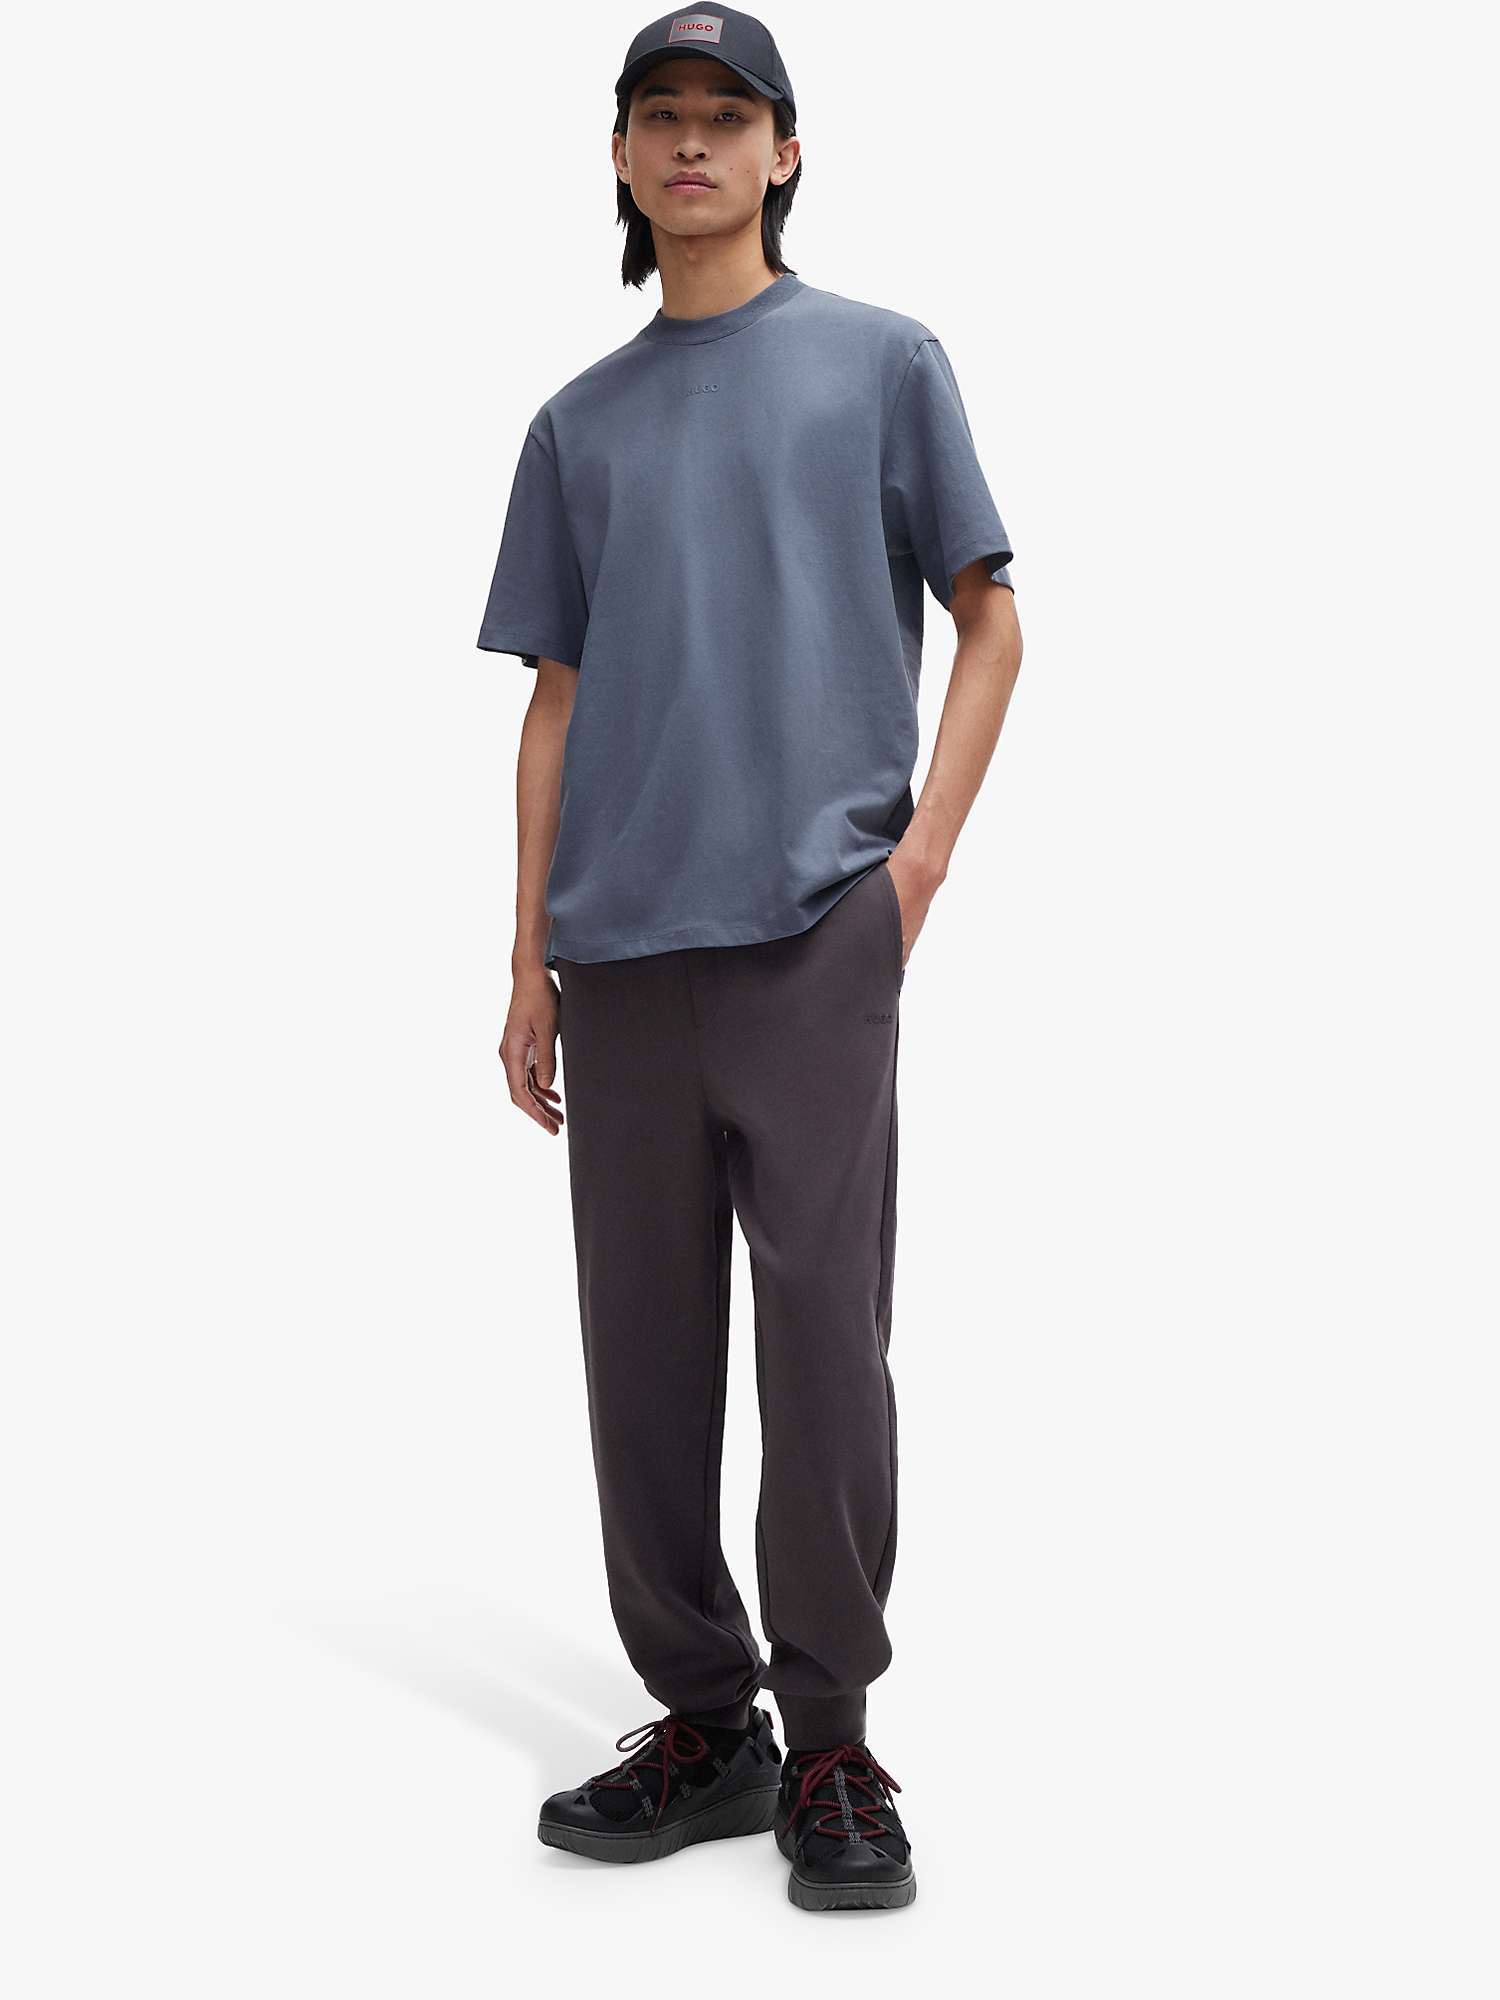 Buy HUGO Dapolino 462 Short Sleeve T-Shirt, Open Blue Online at johnlewis.com